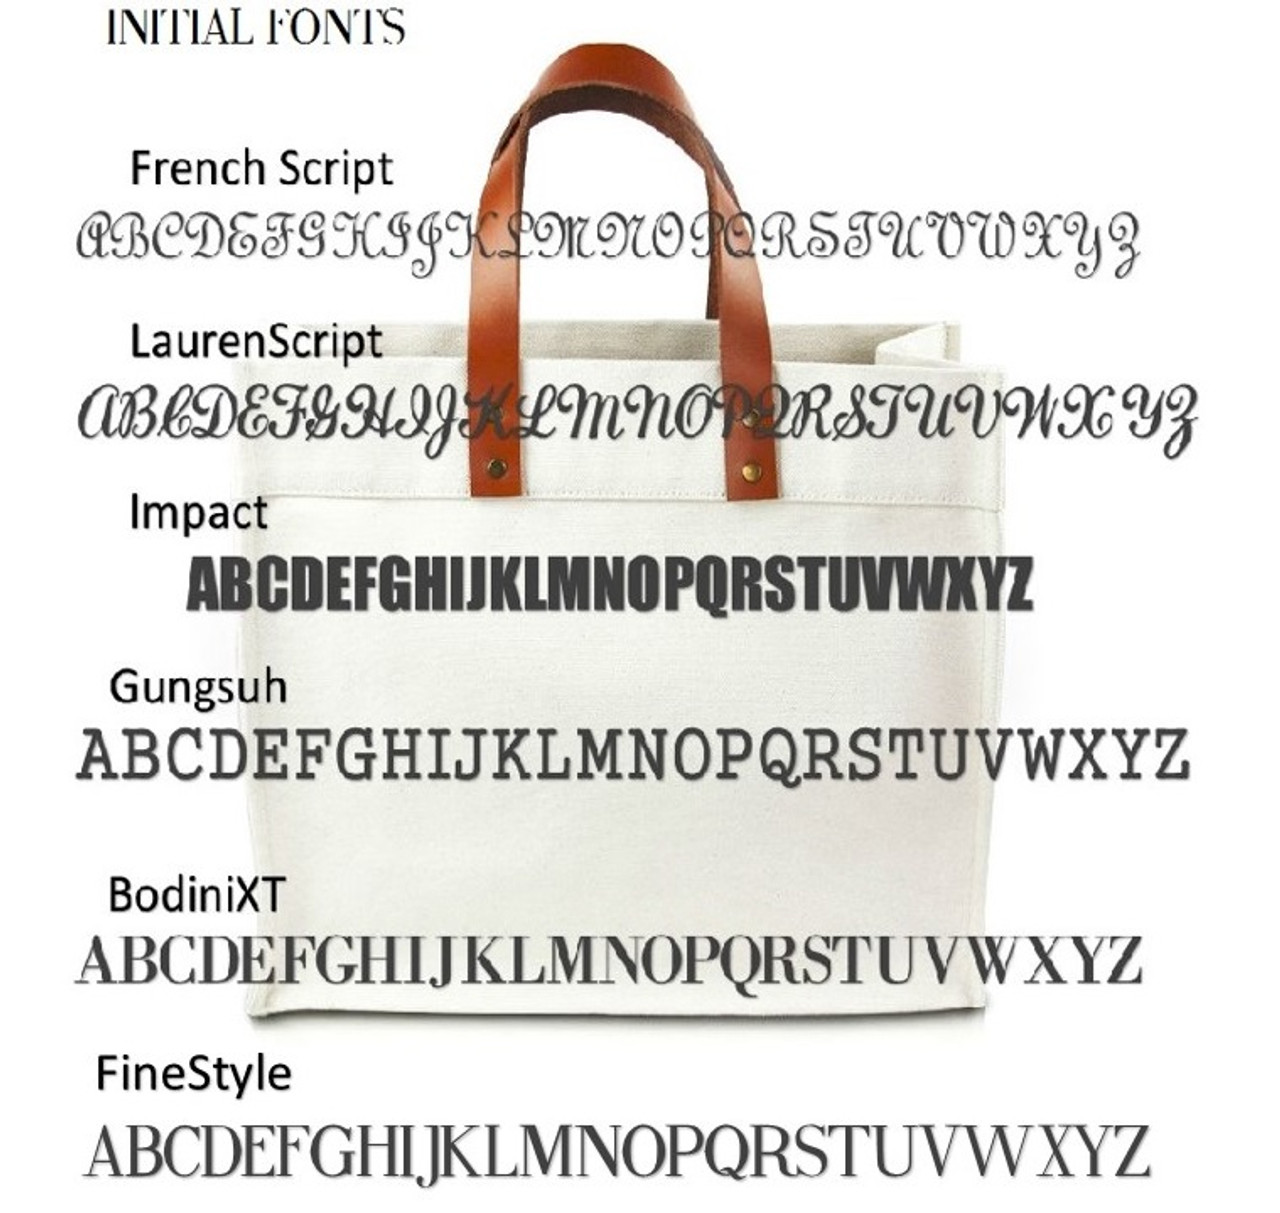 Hunting Bag Monogram Canvas - Personalisation M41140